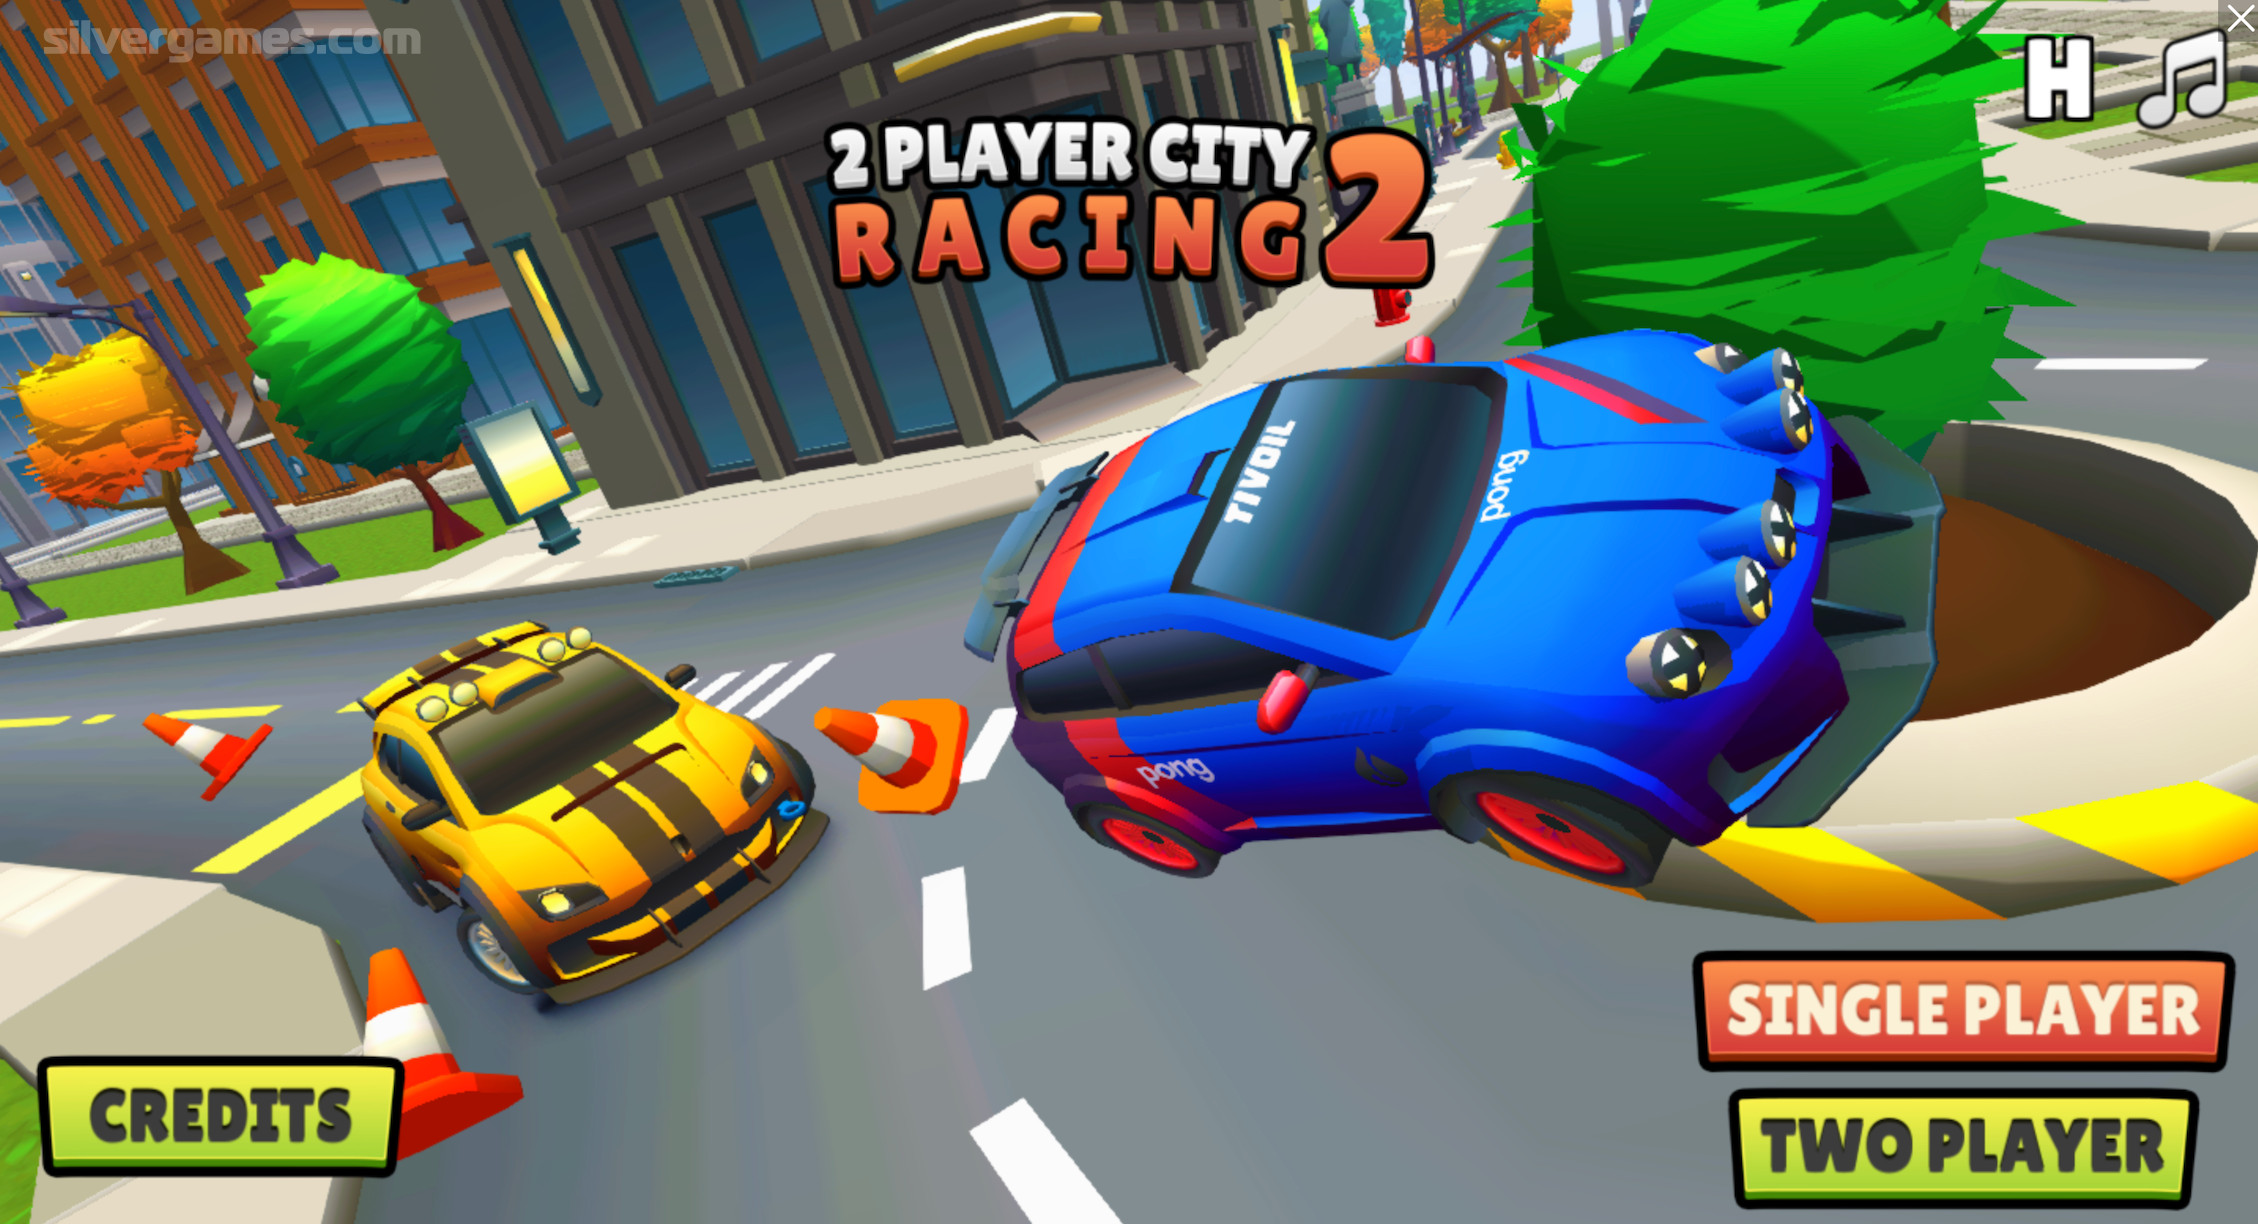 2 player racing games online